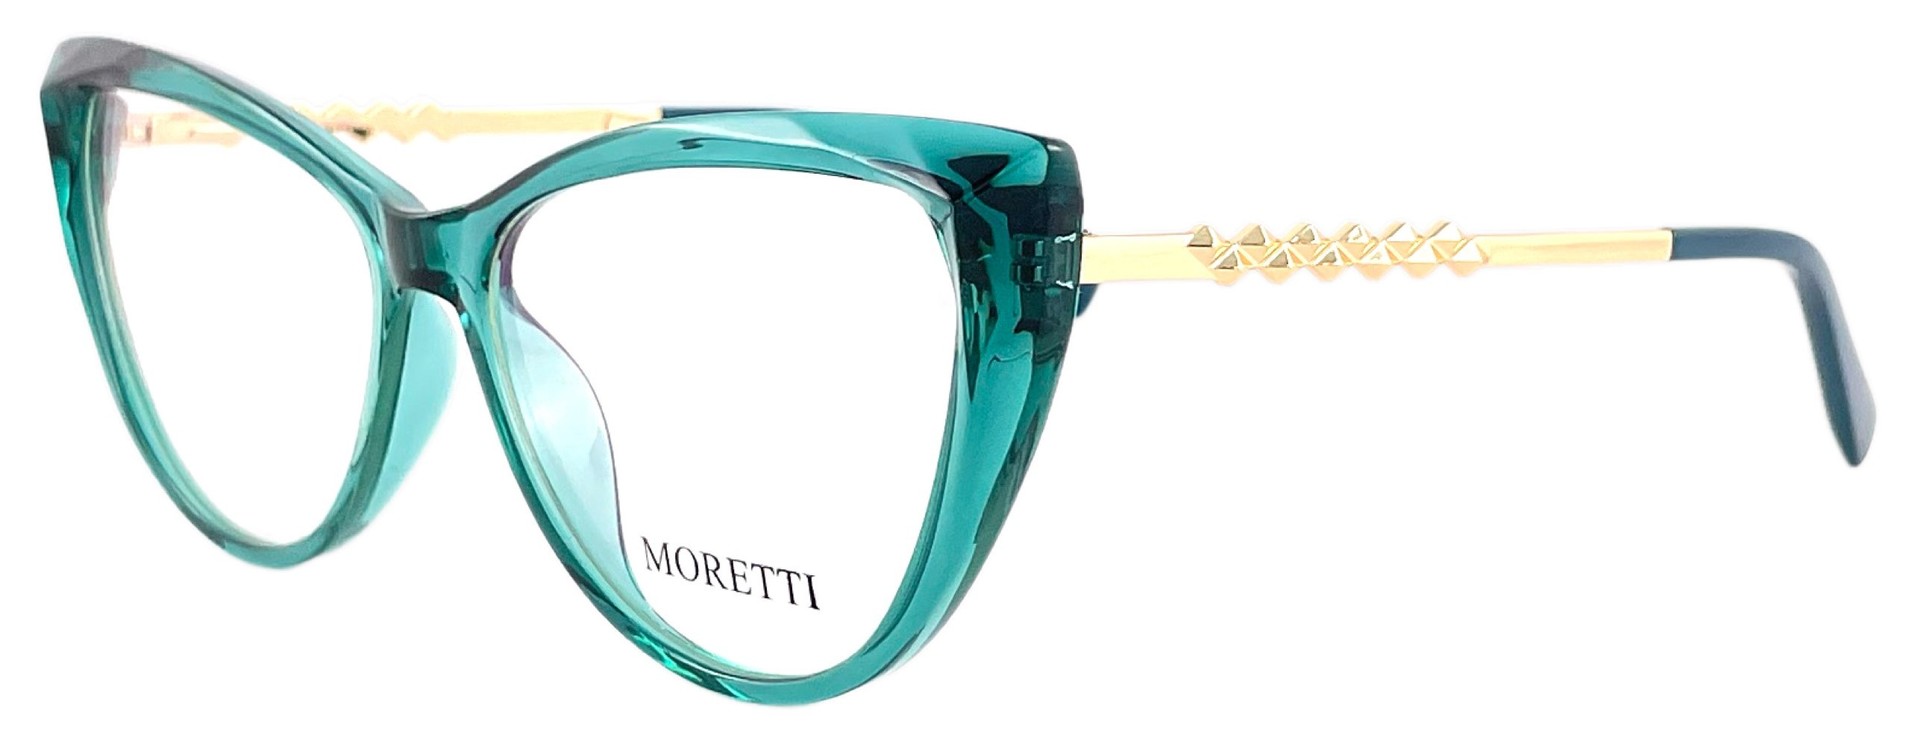 Moretti 2062 C6 2